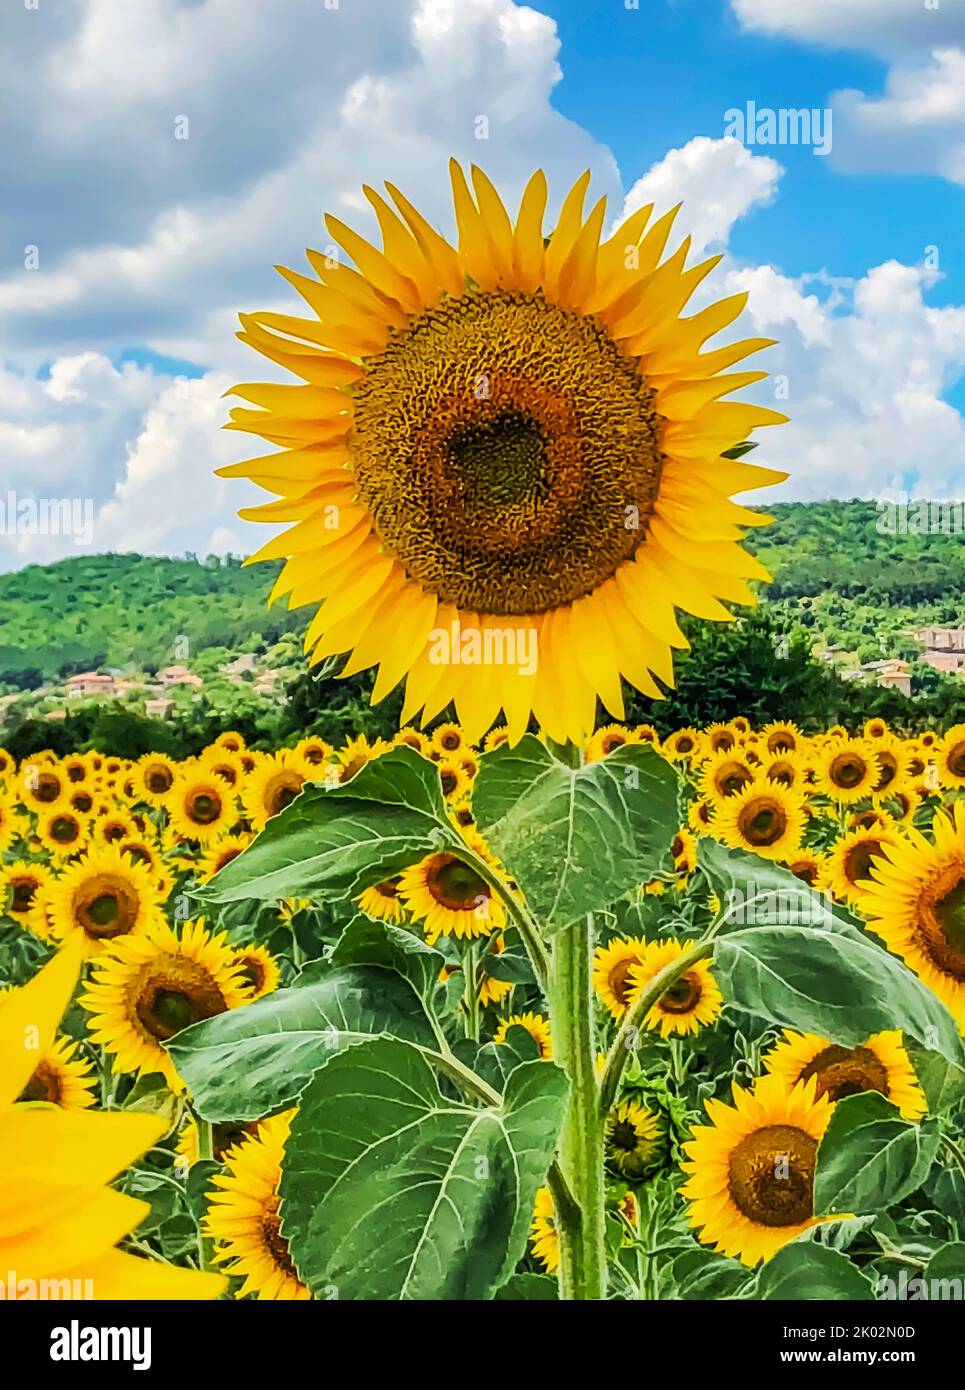 sunflower in a sunflower field Stock Photo